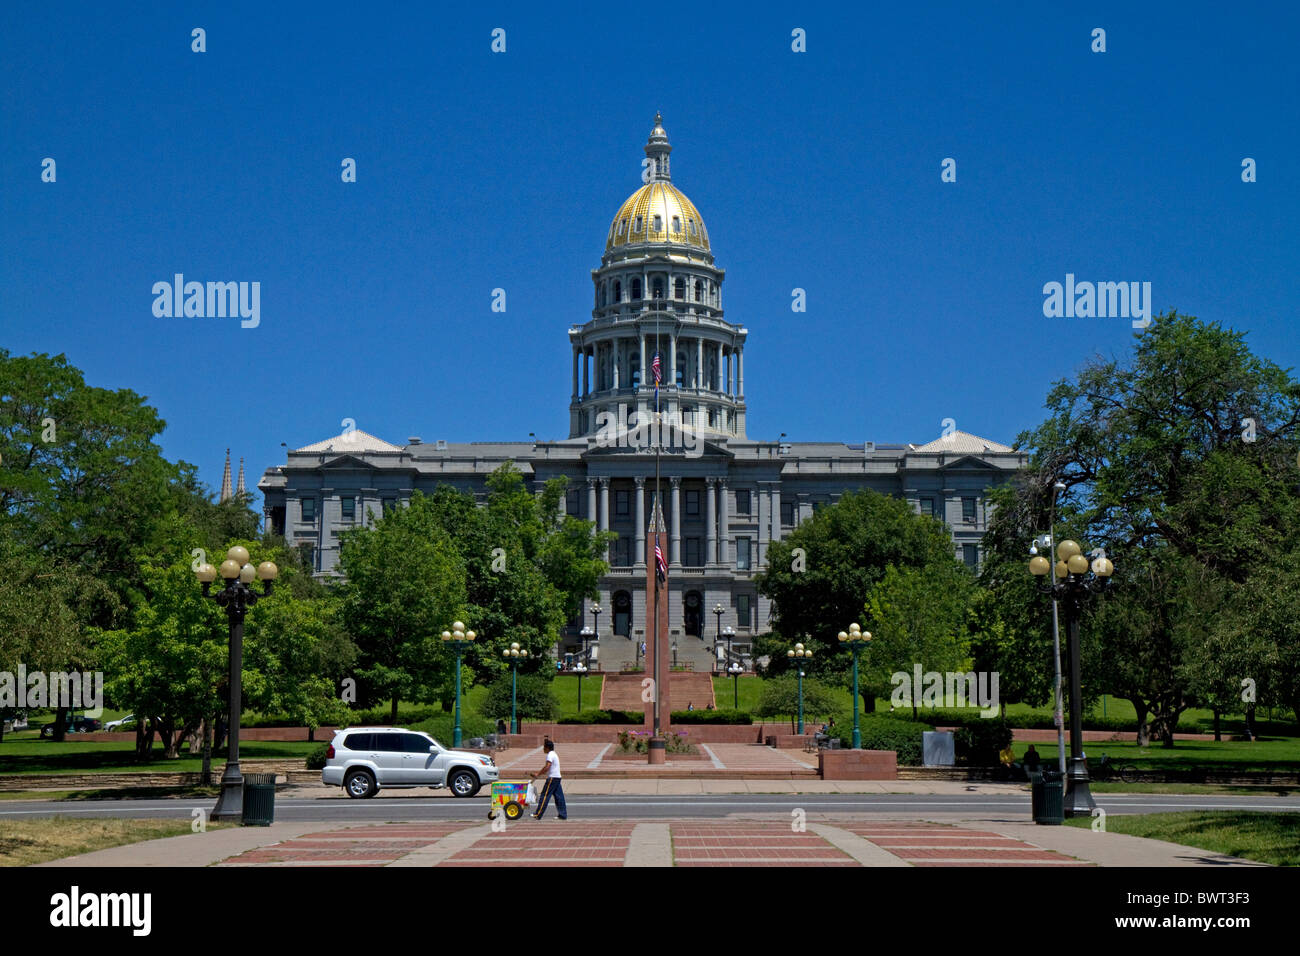 The Colorado State Capitol Building located in Denver, Colorado, USA. Stock Photo